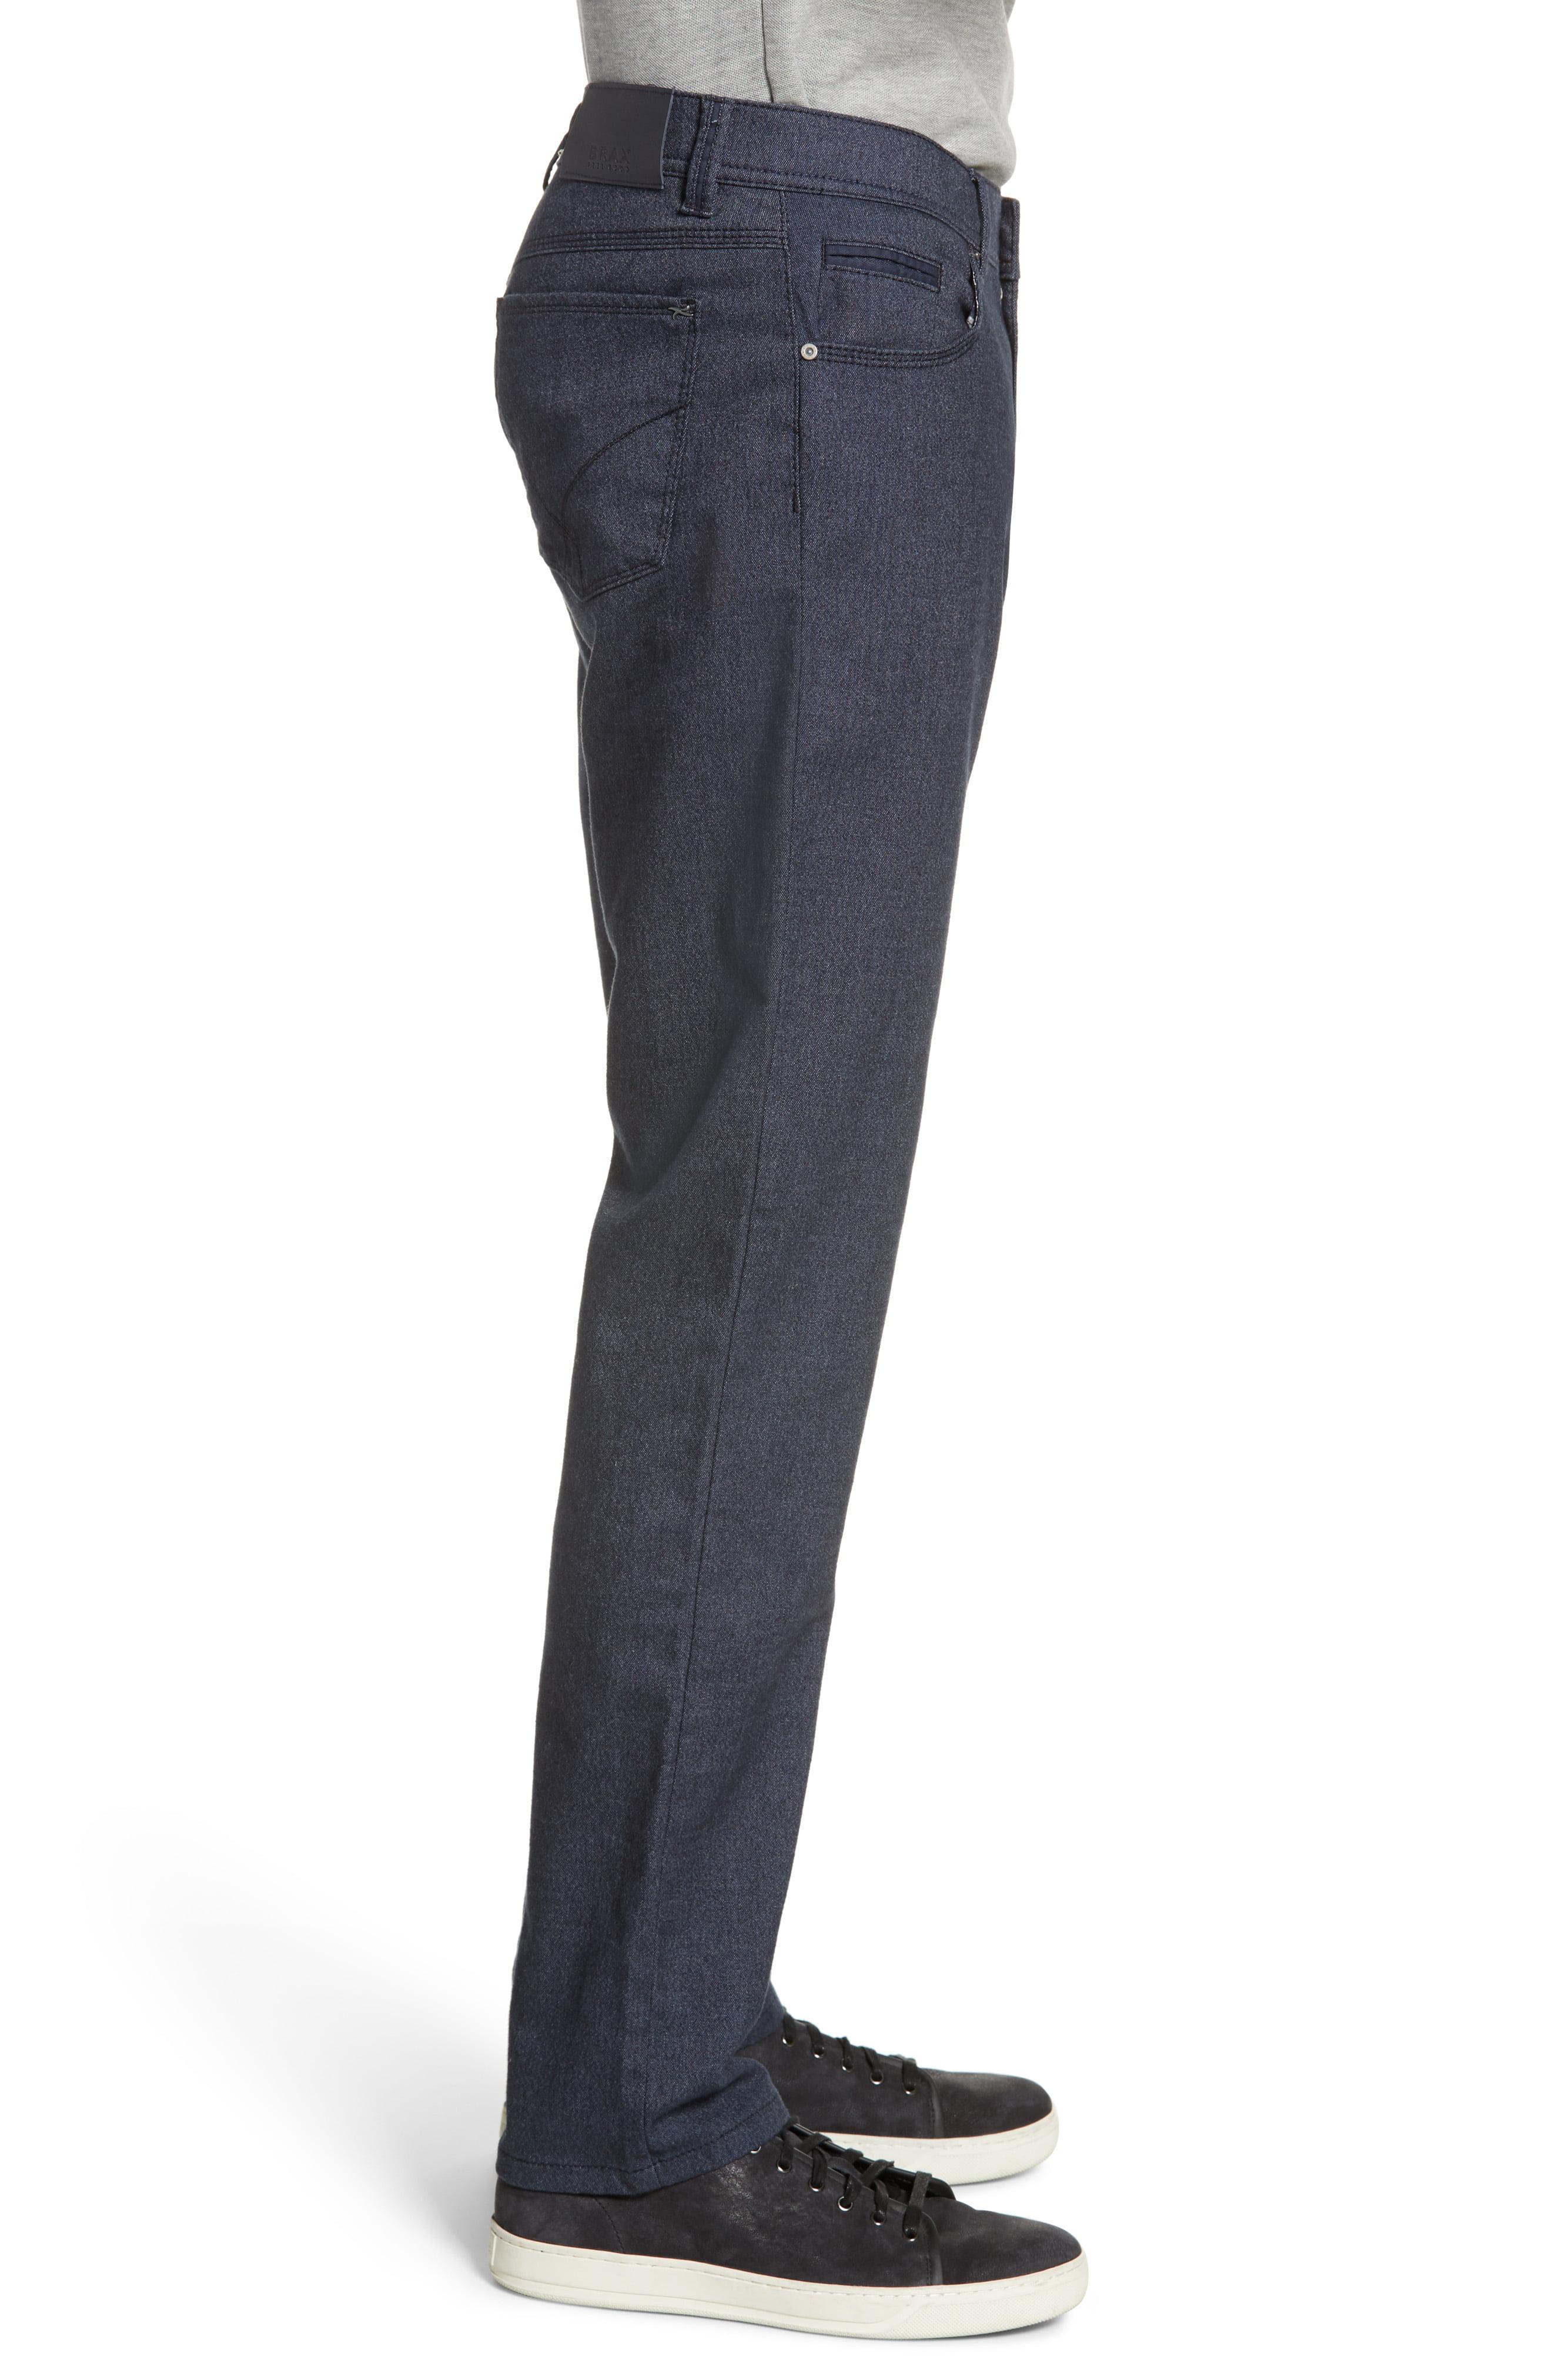 Brax Woolook 2.0 Flex Straight Leg Pants in Midnight (Blue) for Men - Lyst